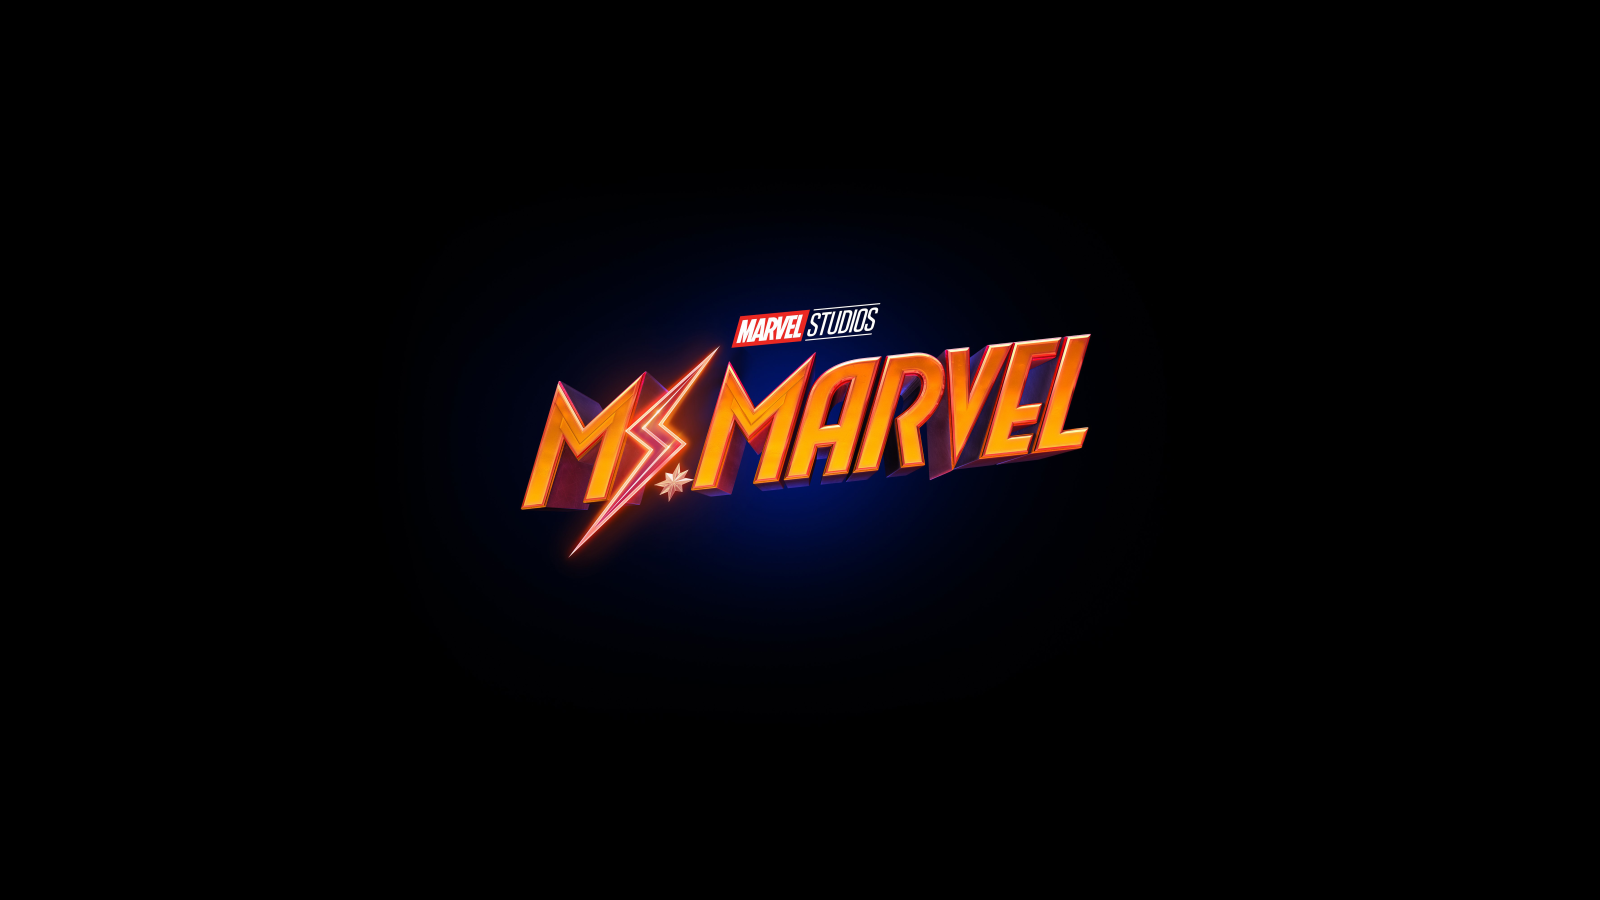 Miss Marvel comic book poster on black background.